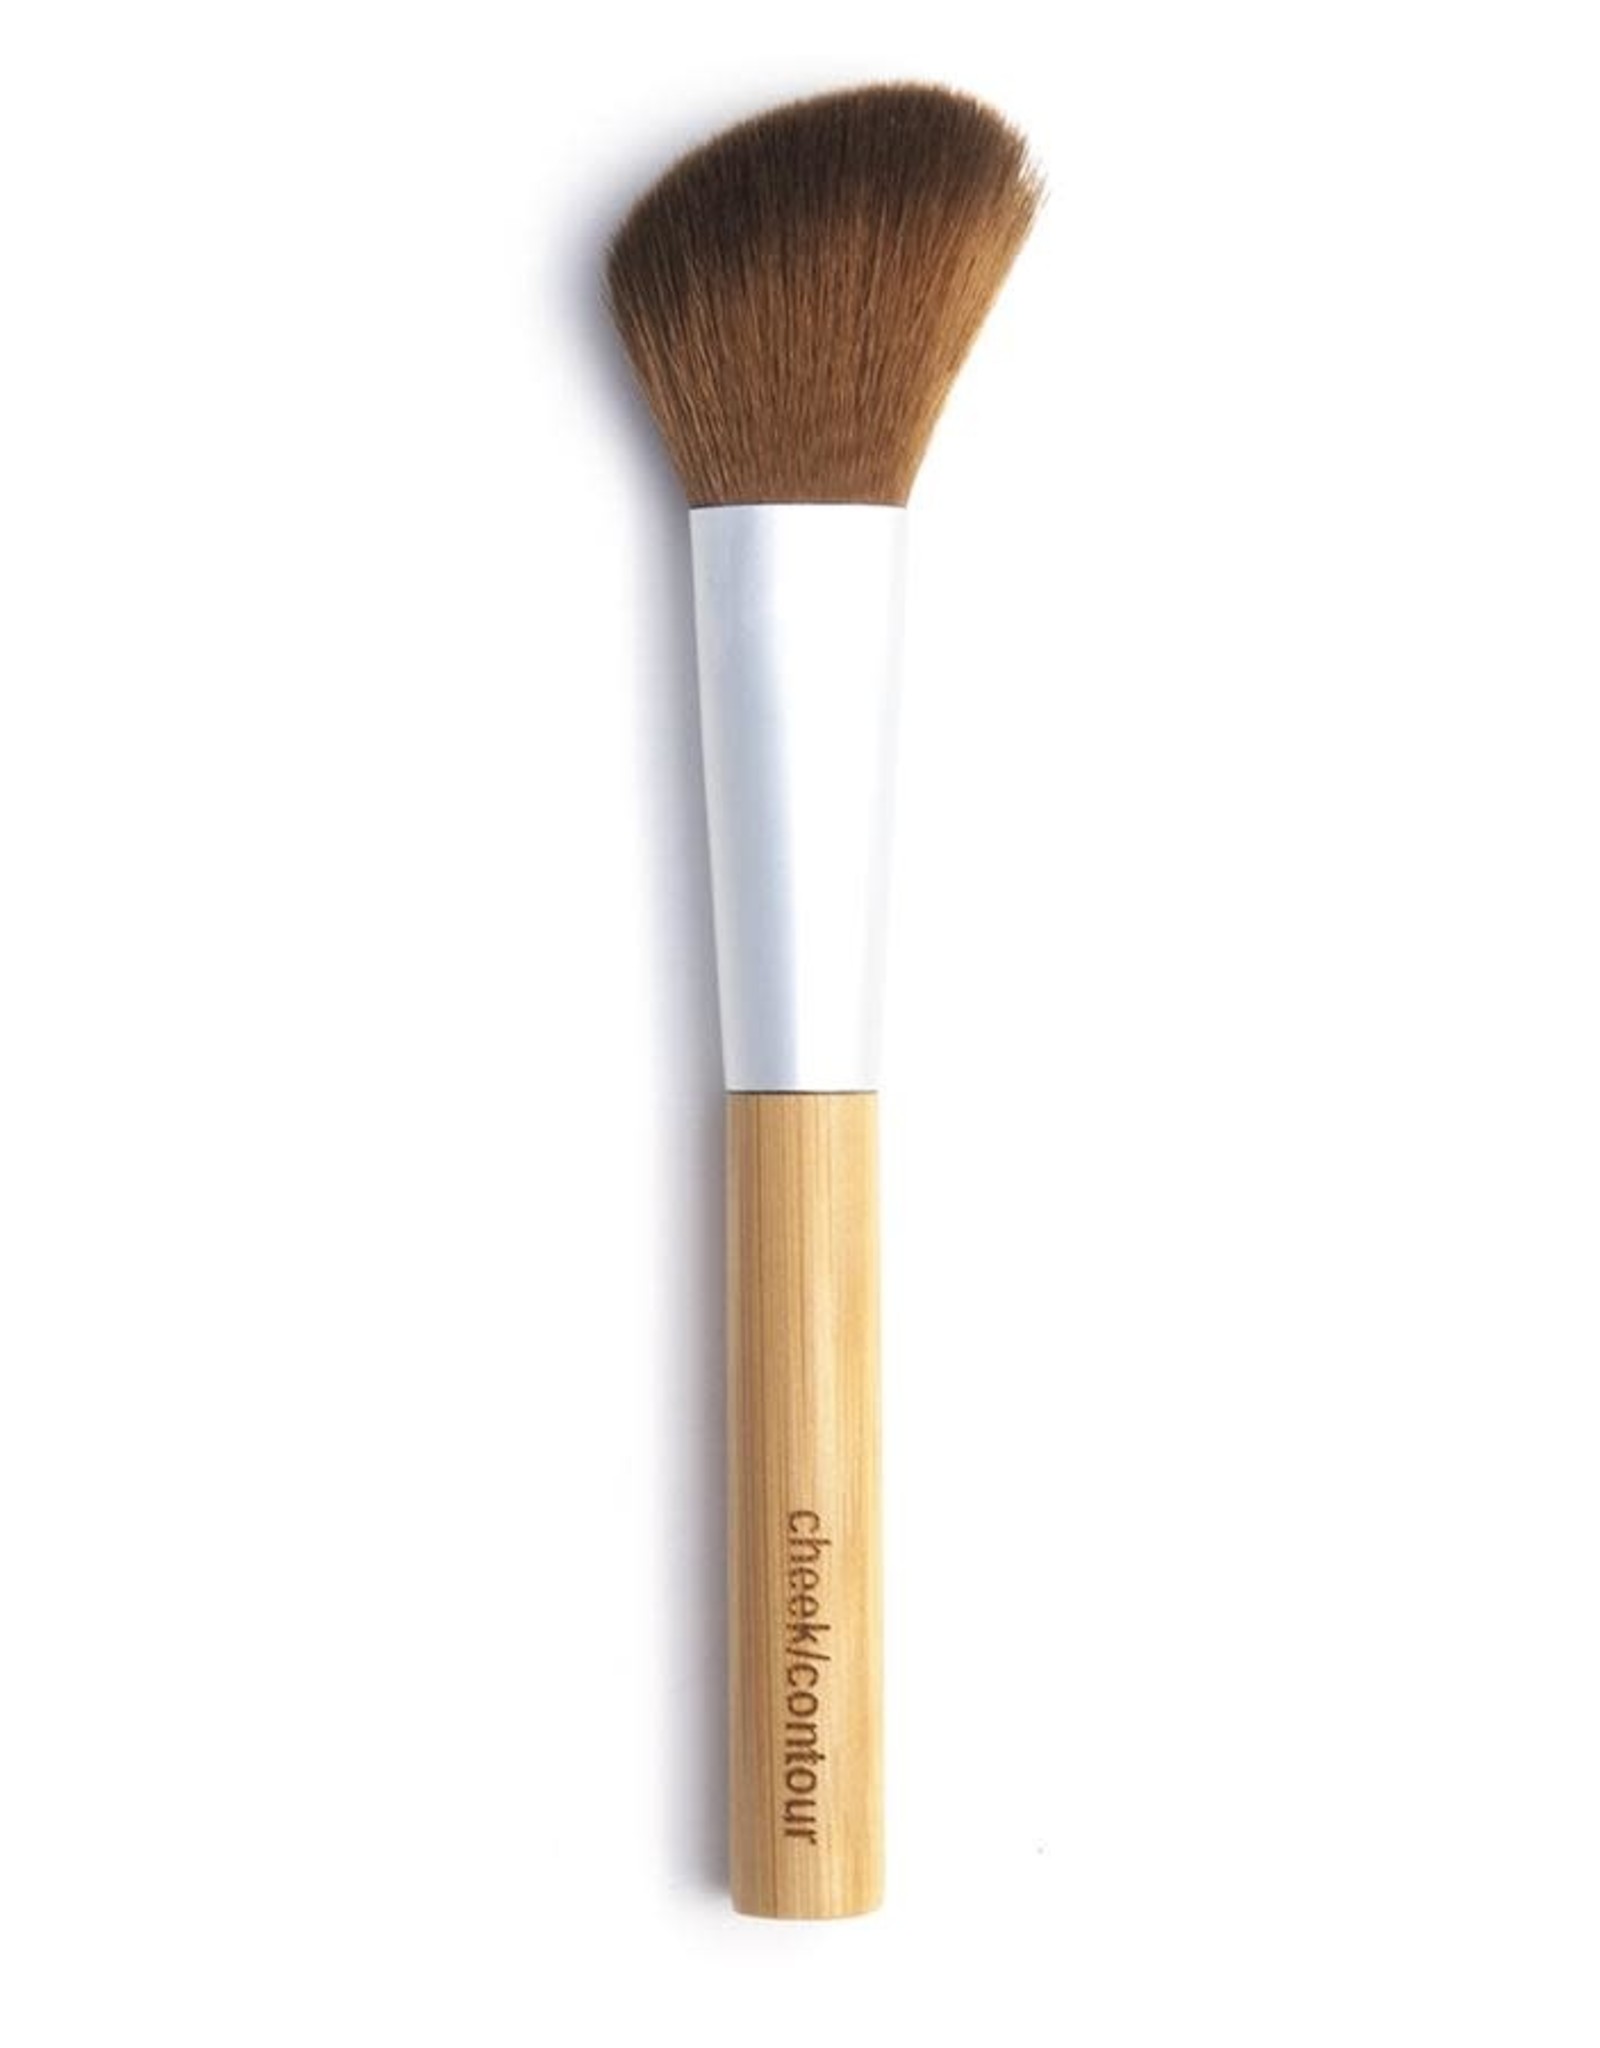 Elate Cosmetics Elate Bamboo Cheek/Contour Brush